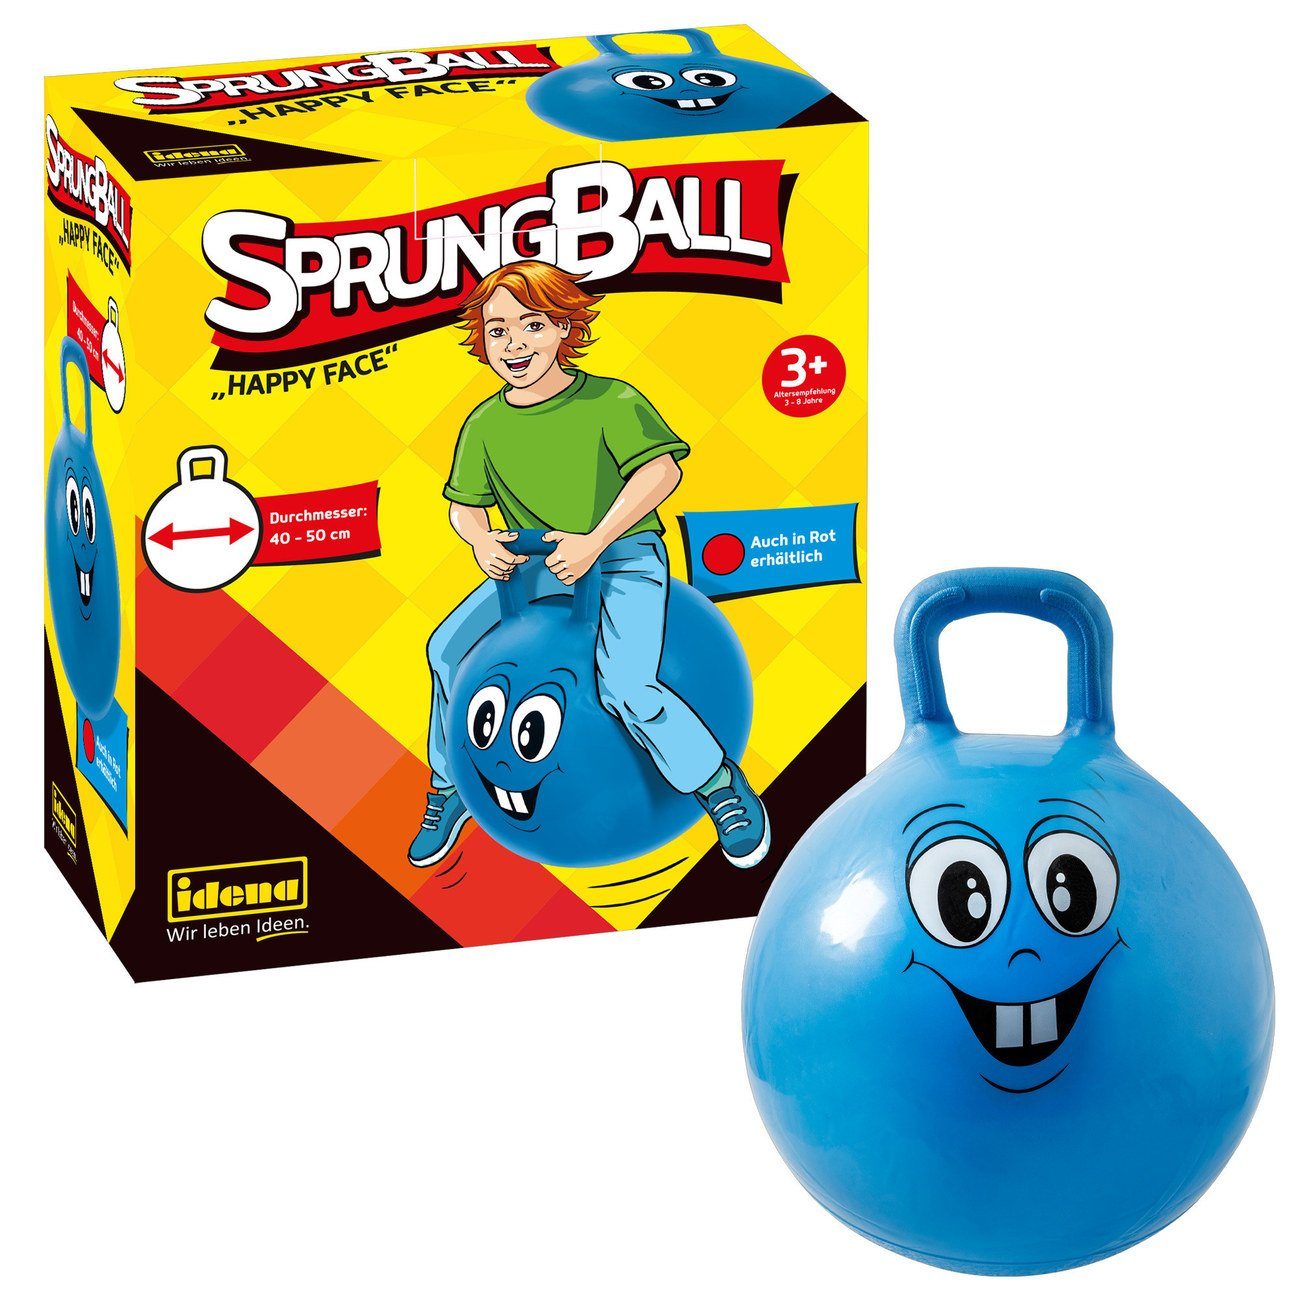 Idena Hüpfball Idena Springball ø blau Hüpfball 50 cm - 40 Face" "Happy Sprungball cm